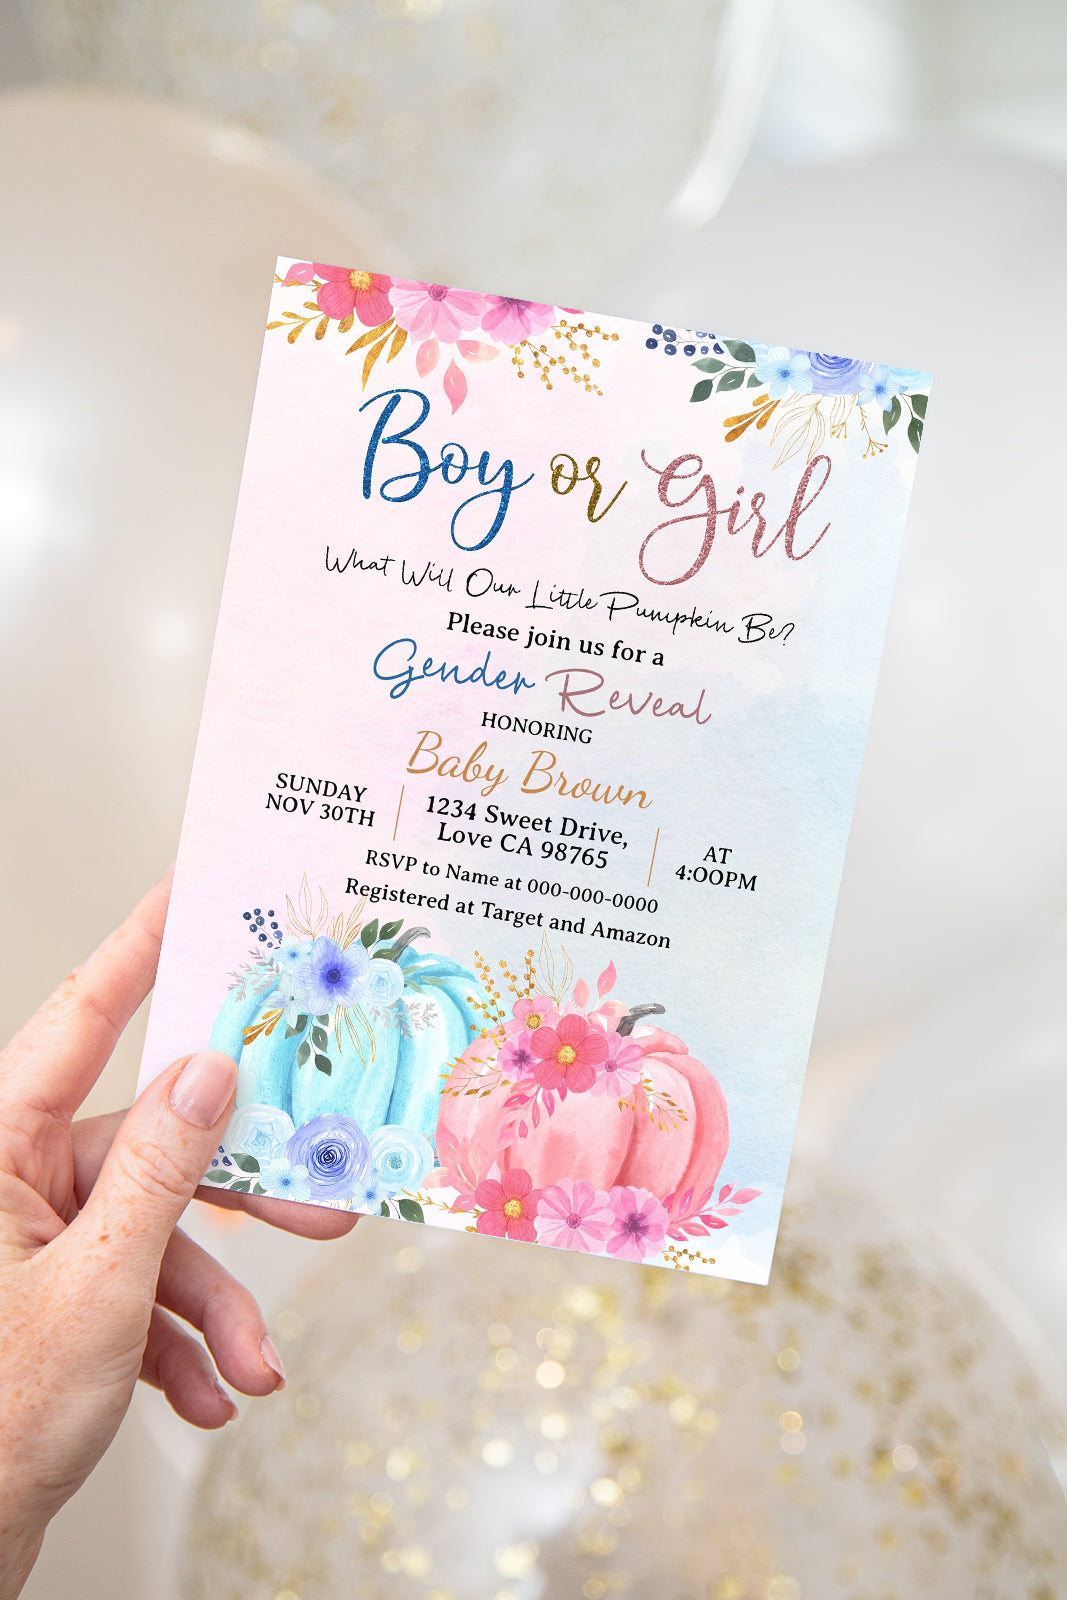 Boy or Girl Pumpkin Gender Reveal Invitation | Fall Gender Reveal -30D